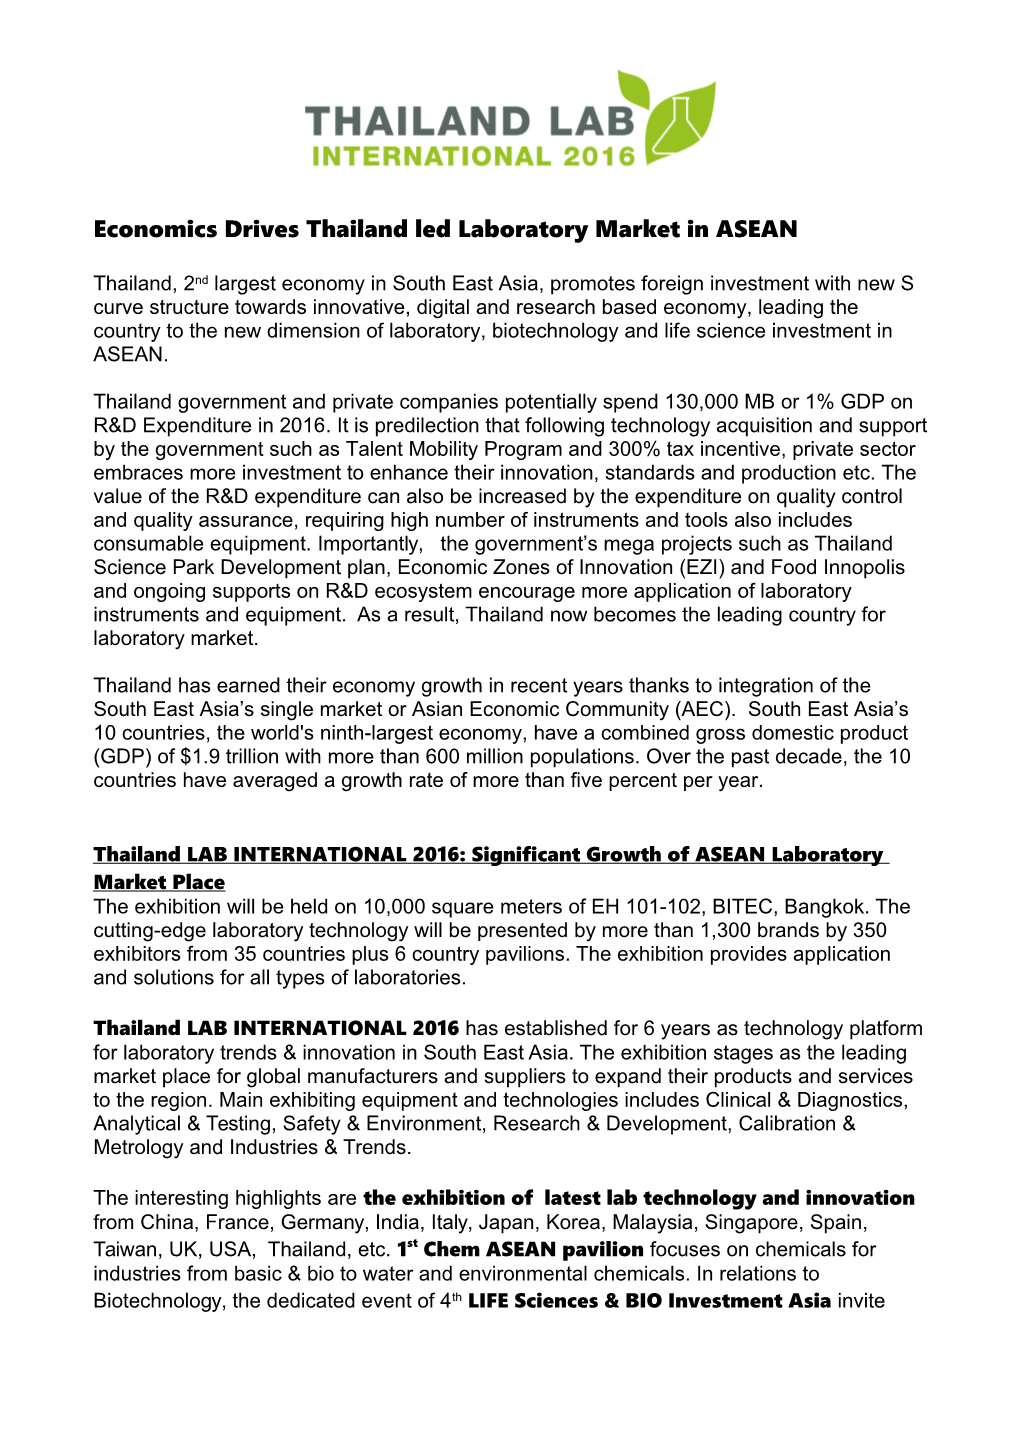 Economics Drives Thailand Led Laboratory Market in ASEAN